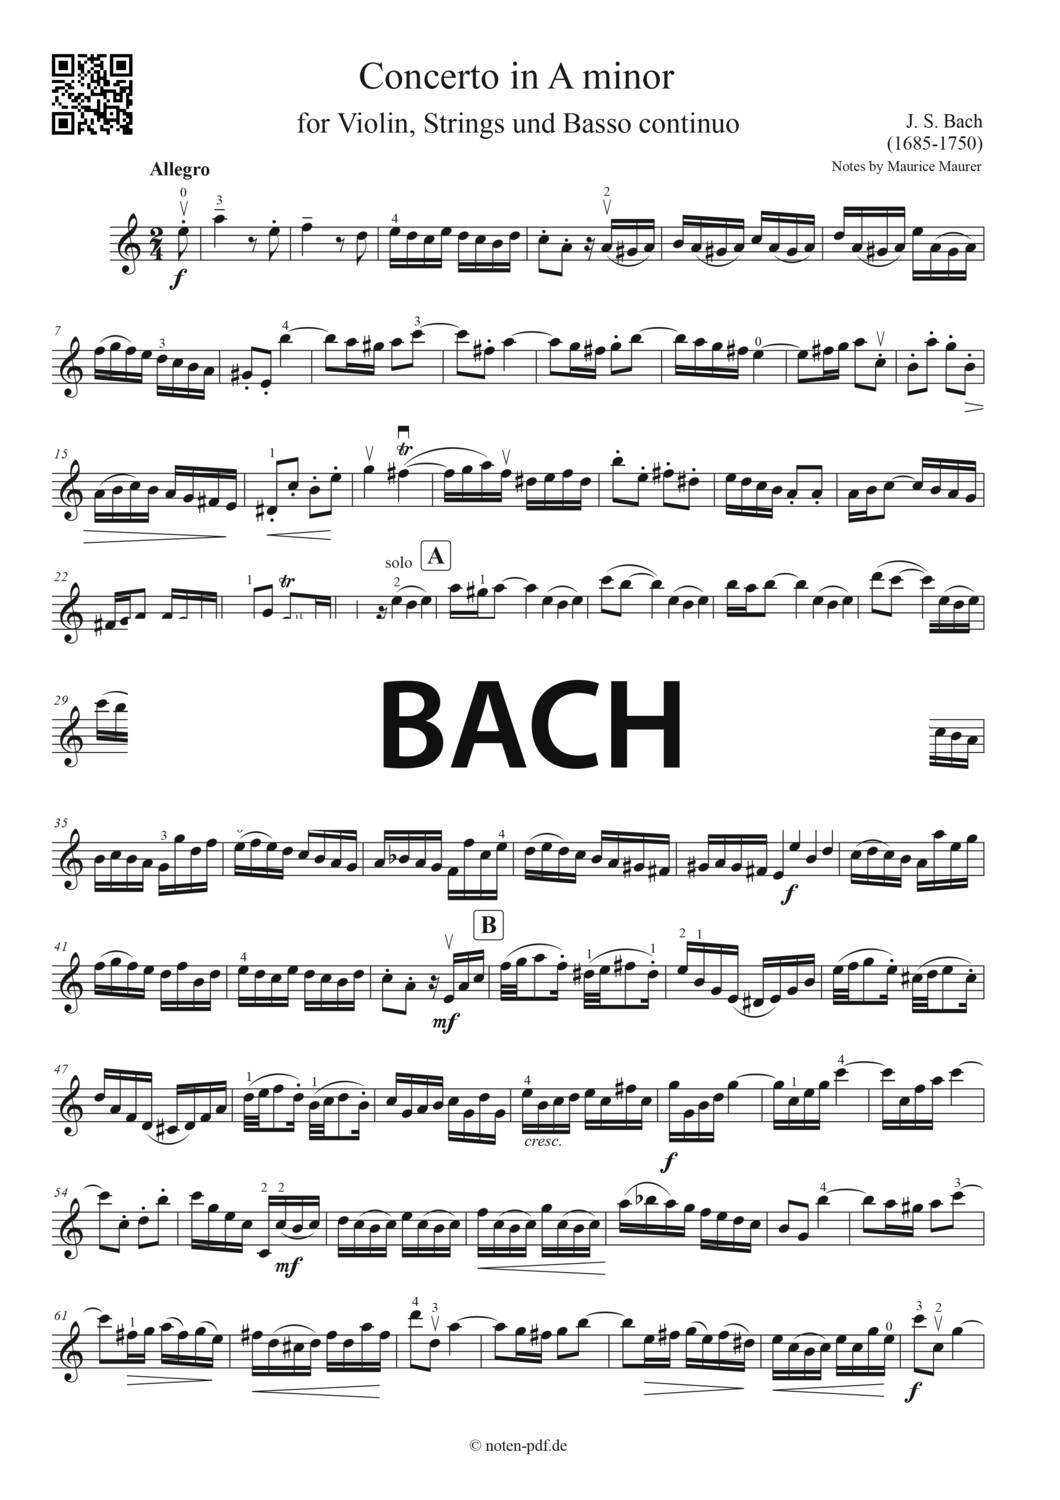 Bach: Concerto in A minor - All Movements